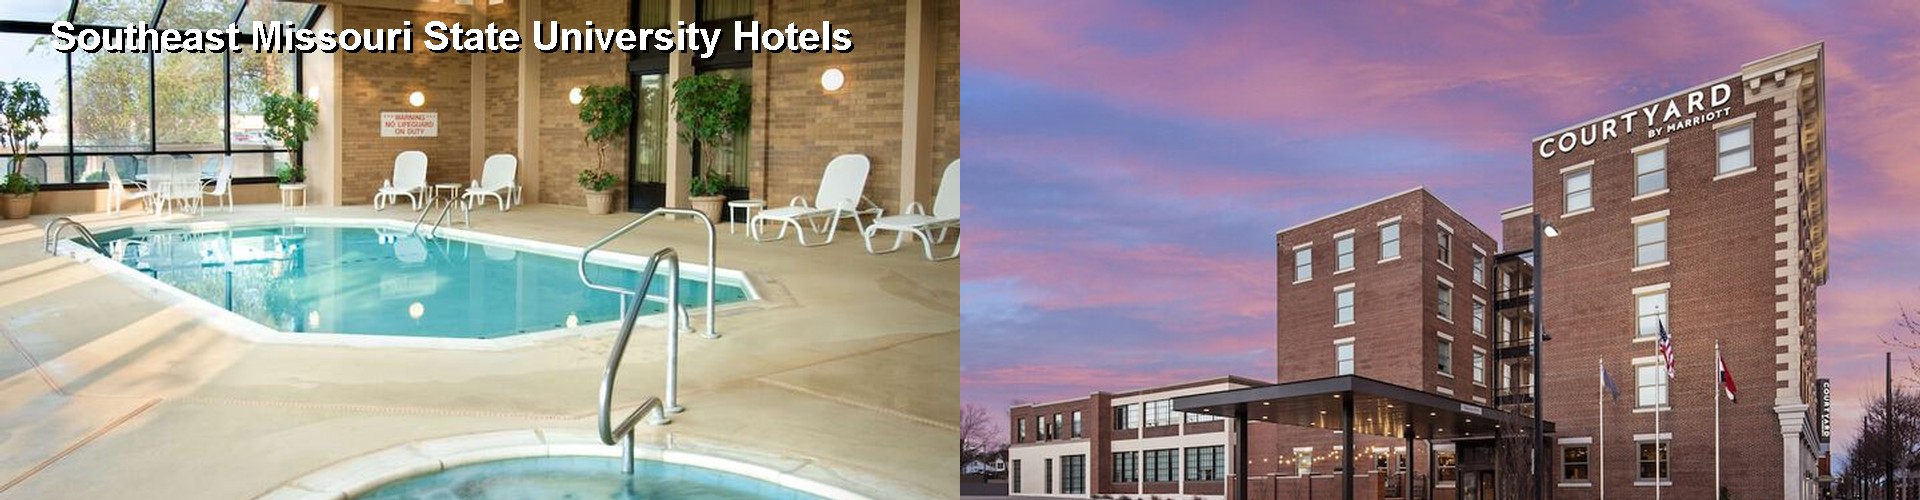 5 Best Hotels near Southeast Missouri State University